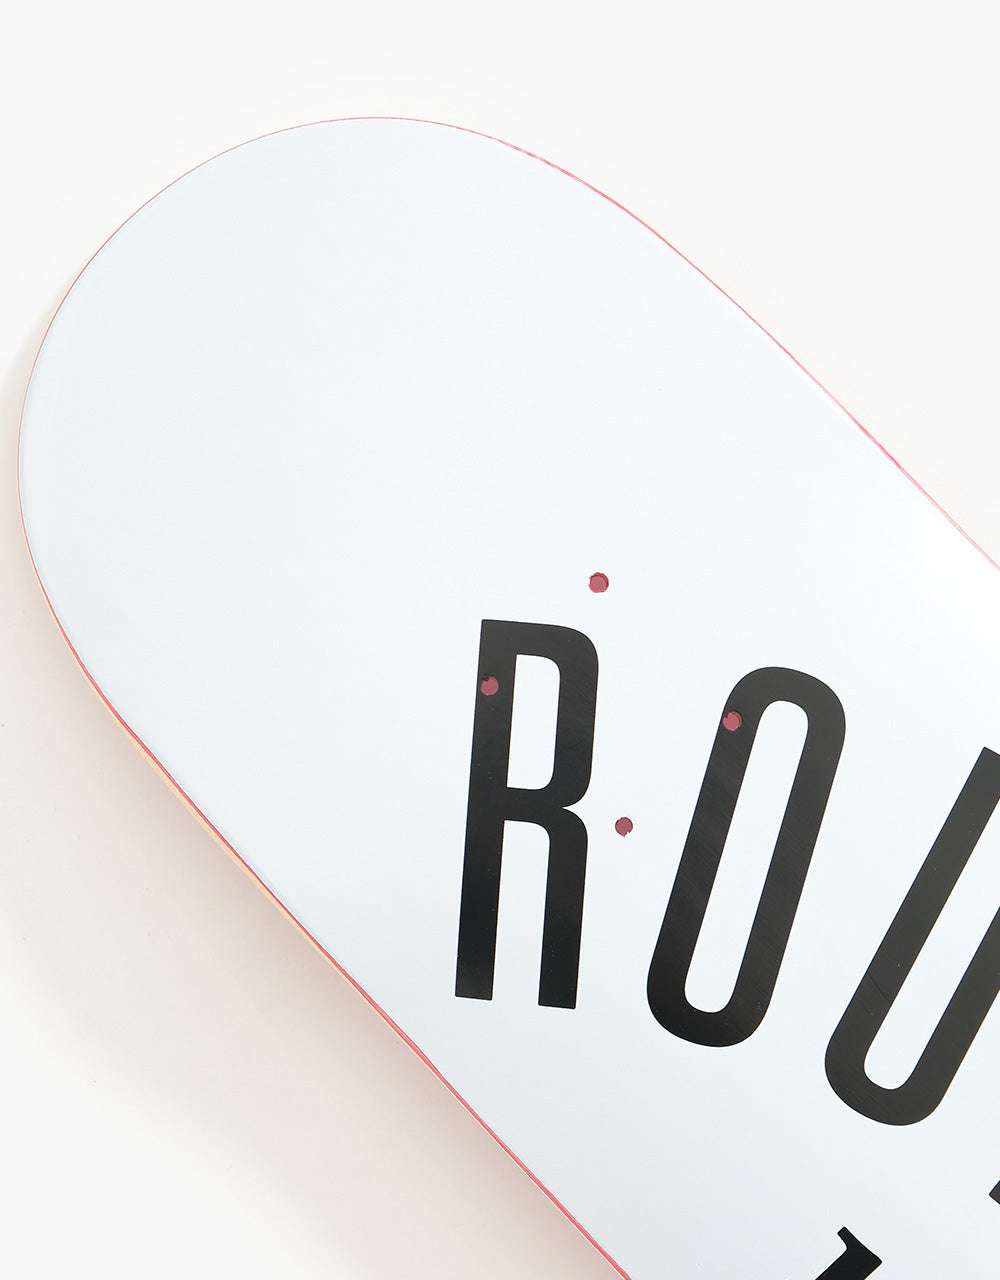 Route One Arch Logo 'OG Shape' Skateboard Deck - 7.75"